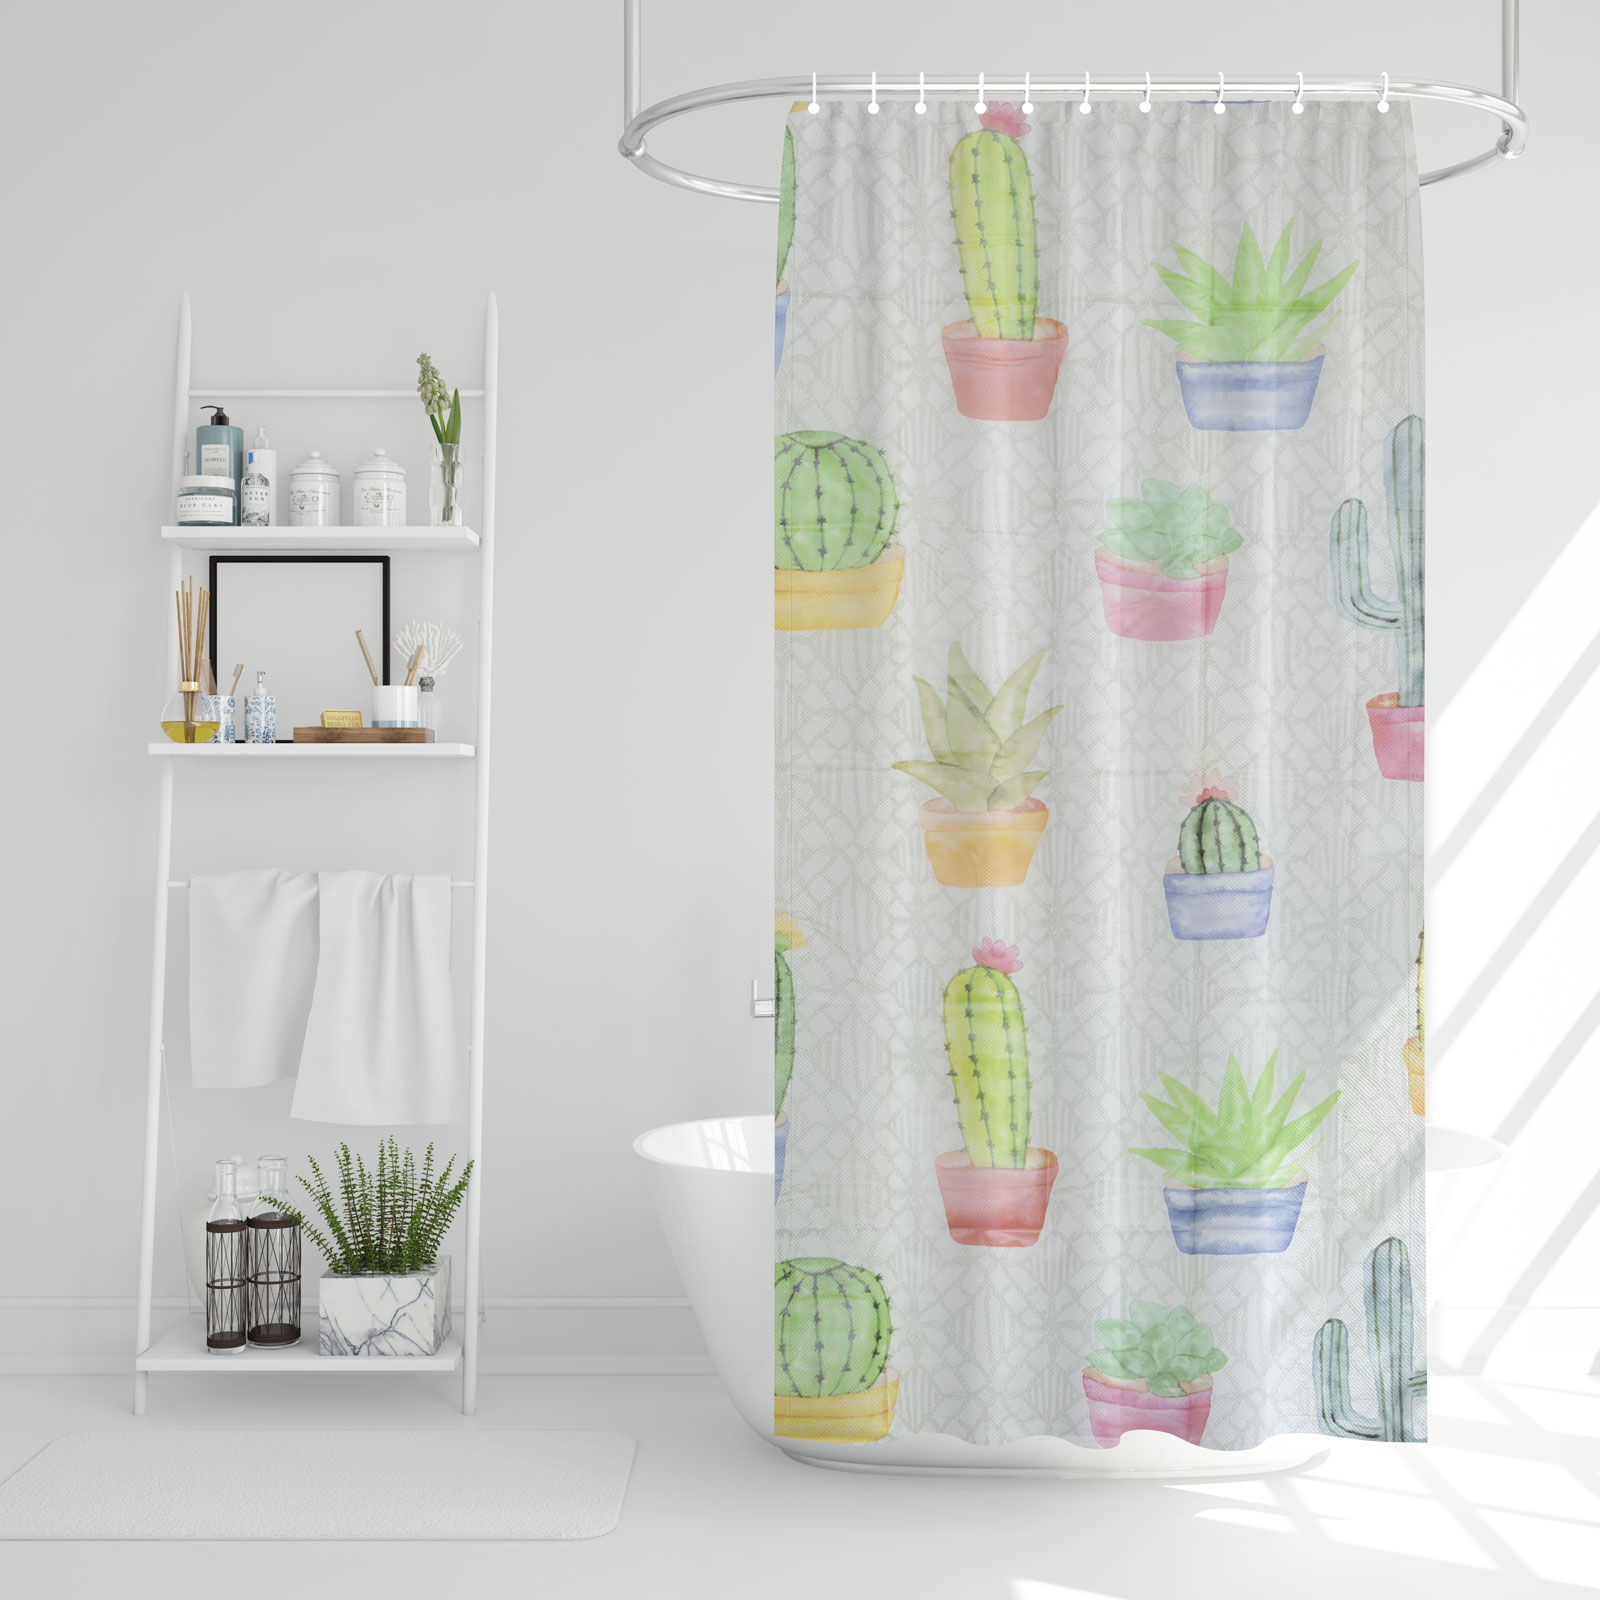 Závěs do sprchy - kaktus - 180 x 180 cm